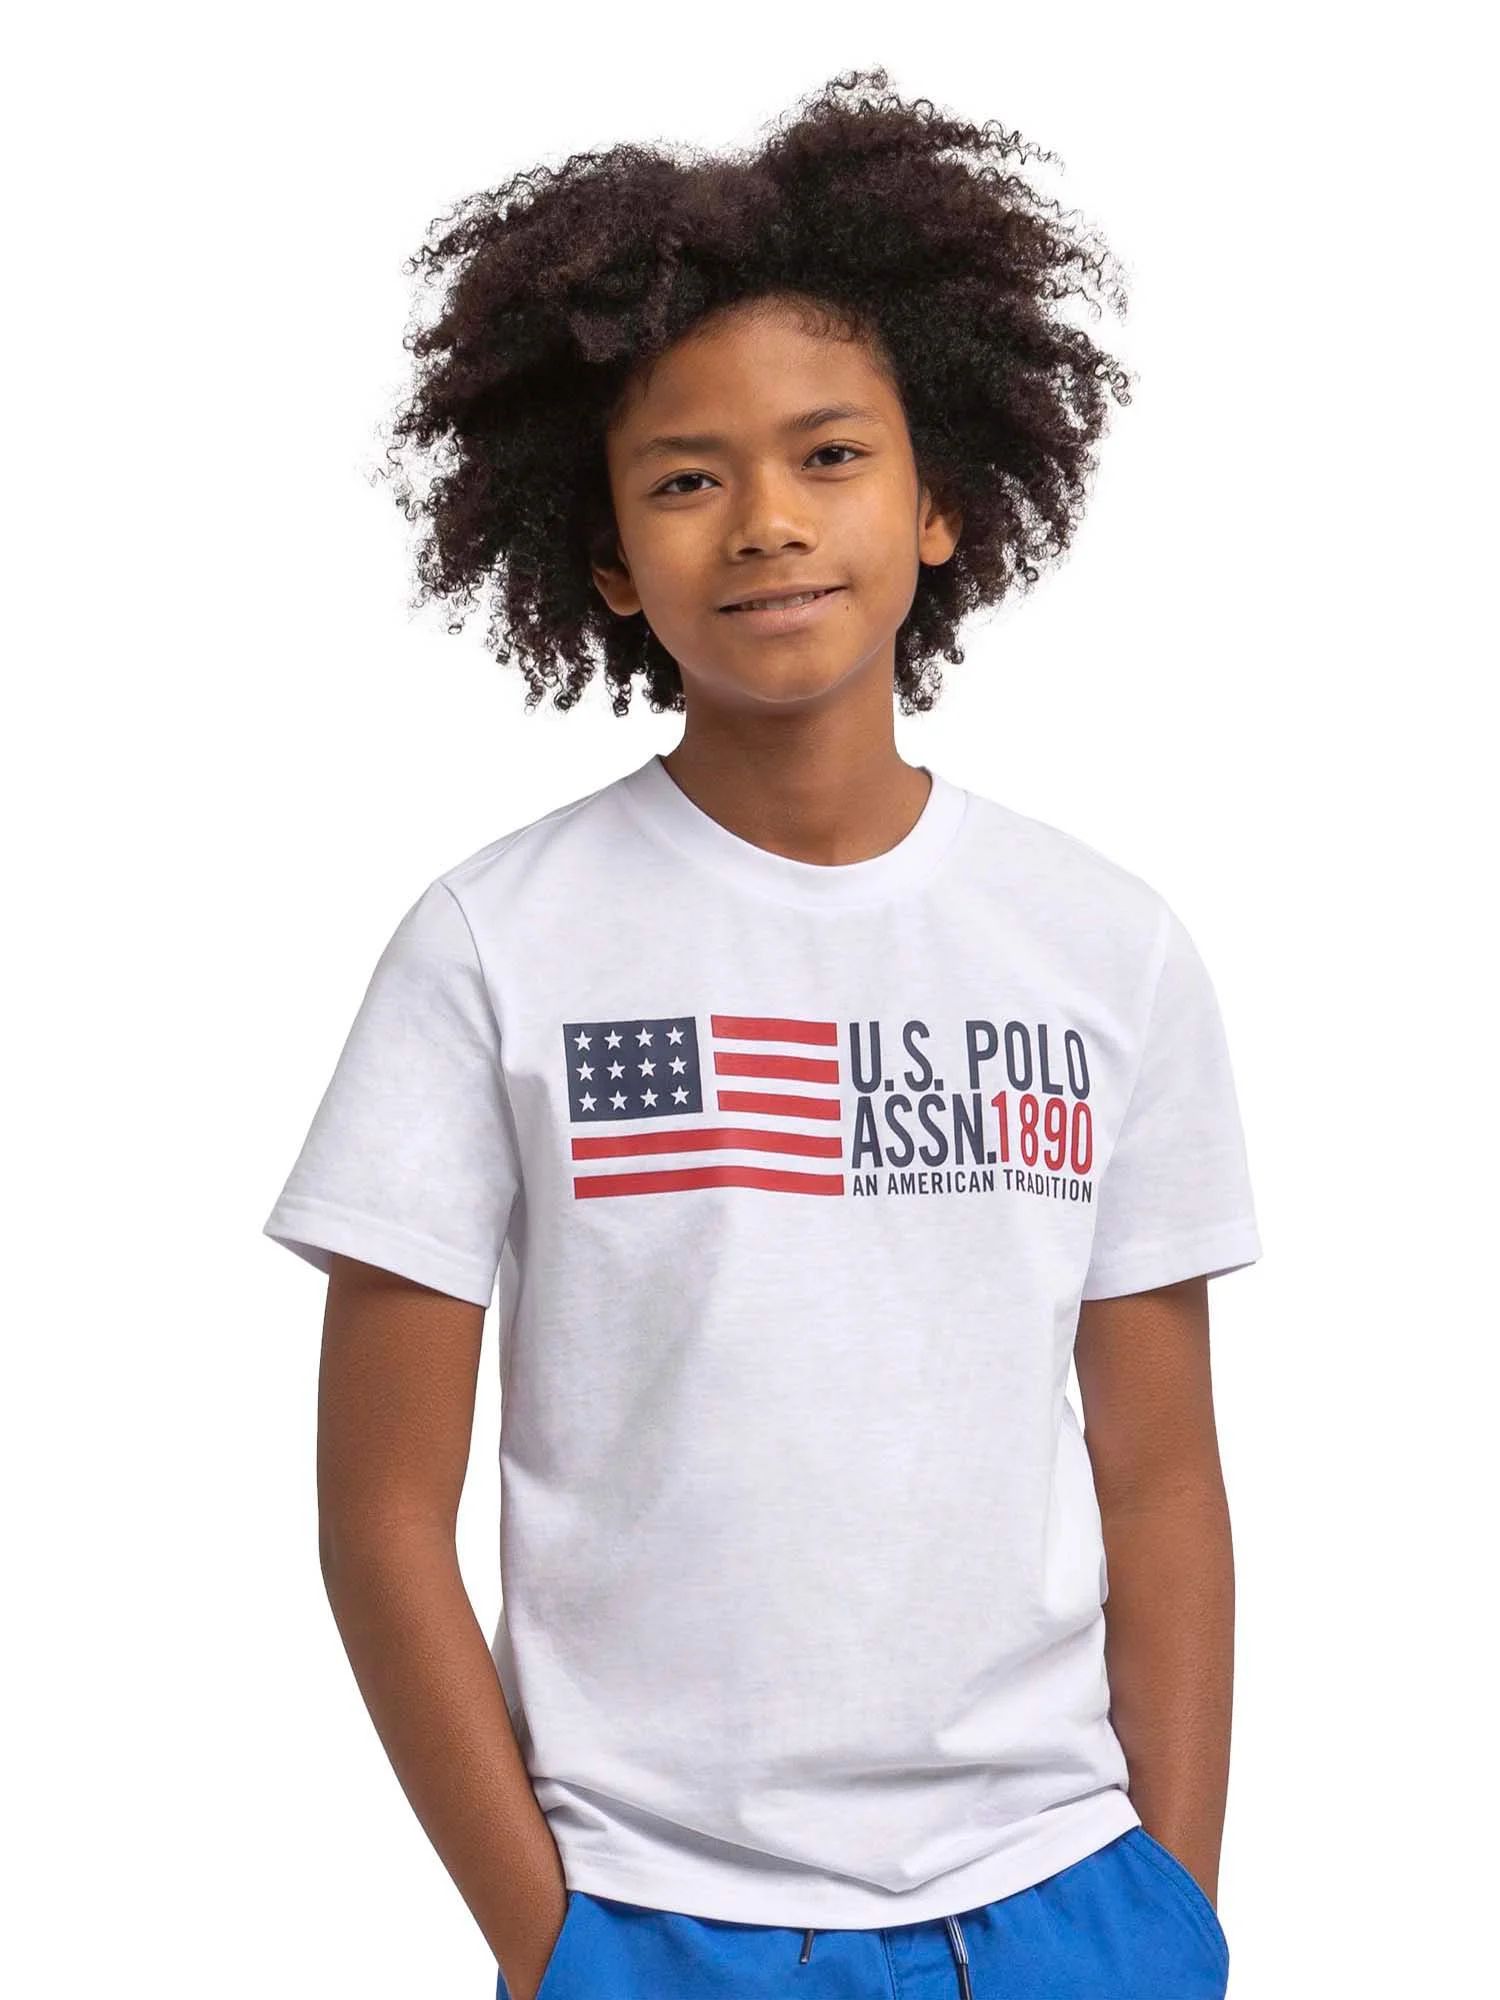 U.S. Polo Assn. Boys American Flag Short Sleeve Graphic T-Shirt, Sizes 4-18 | Walmart (US)